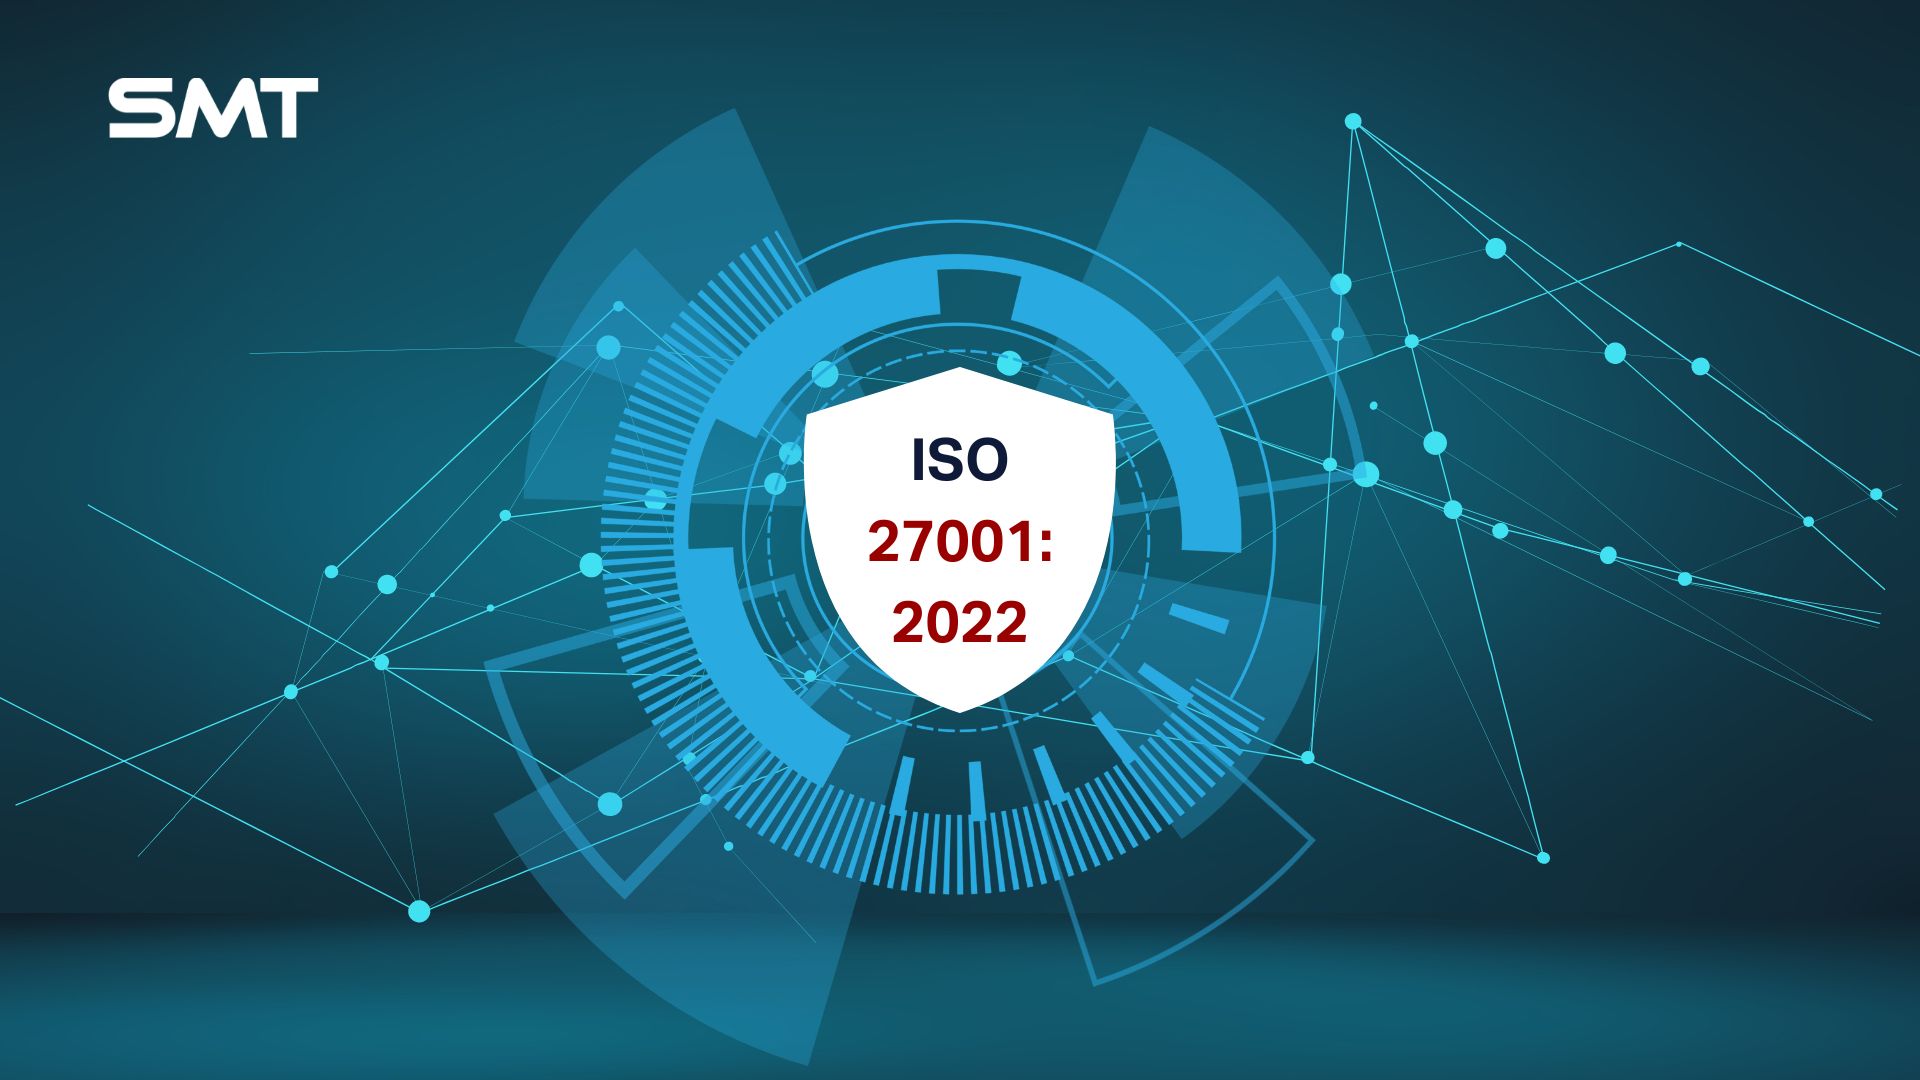 ISO 27001:2022 Certification for SMT.